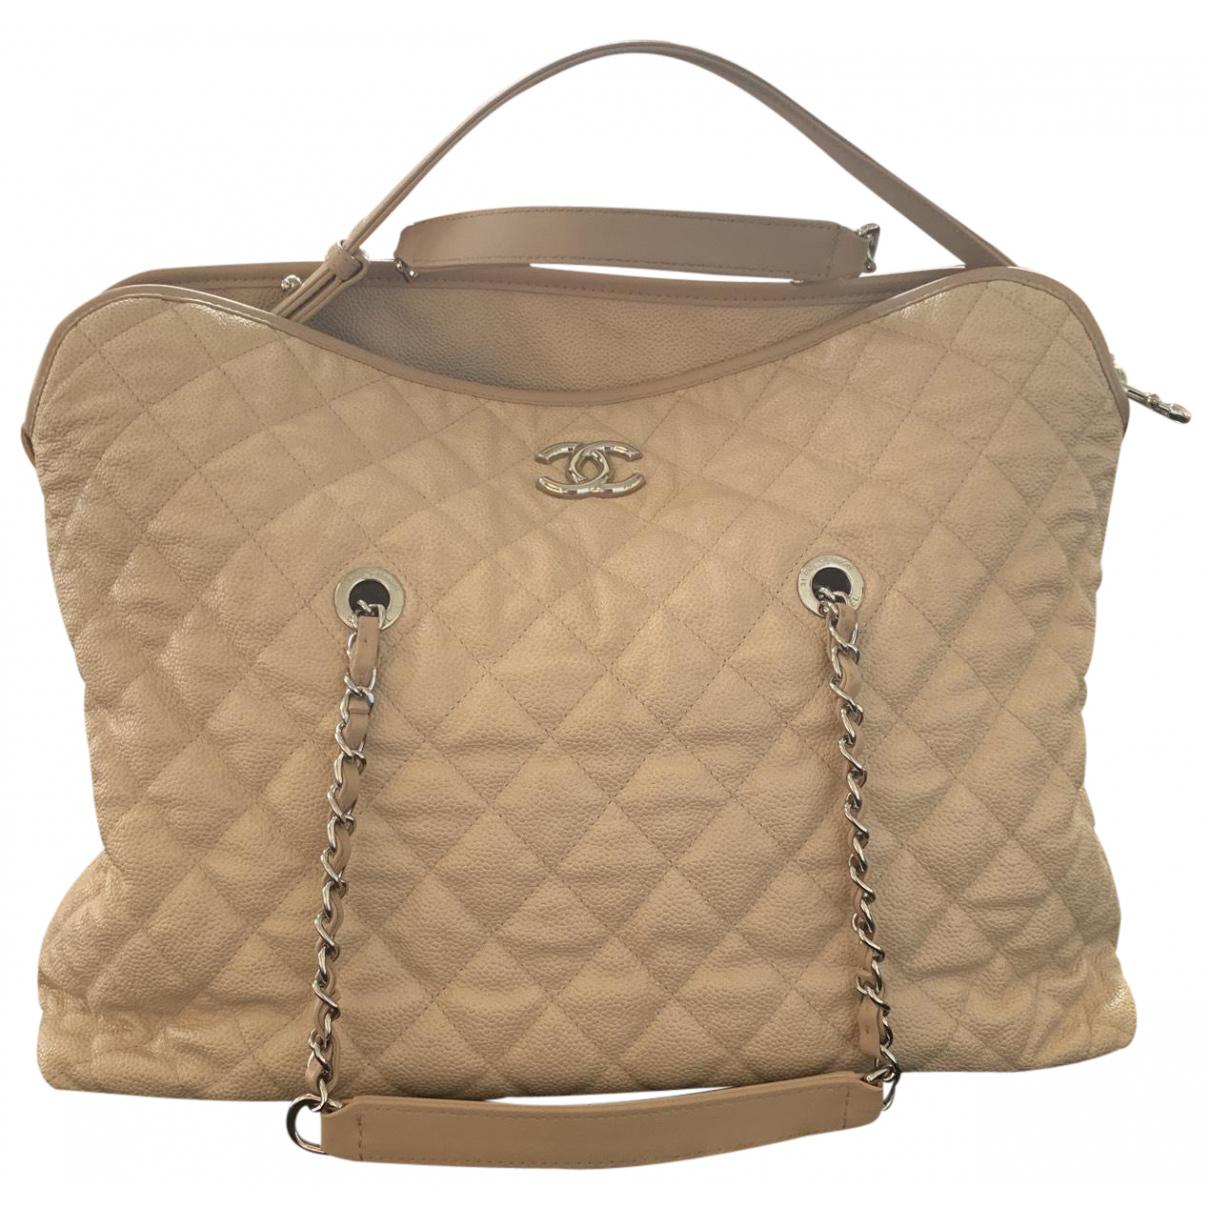 Chanel 19 leather handbag Chanel Khaki in Leather - 25687290